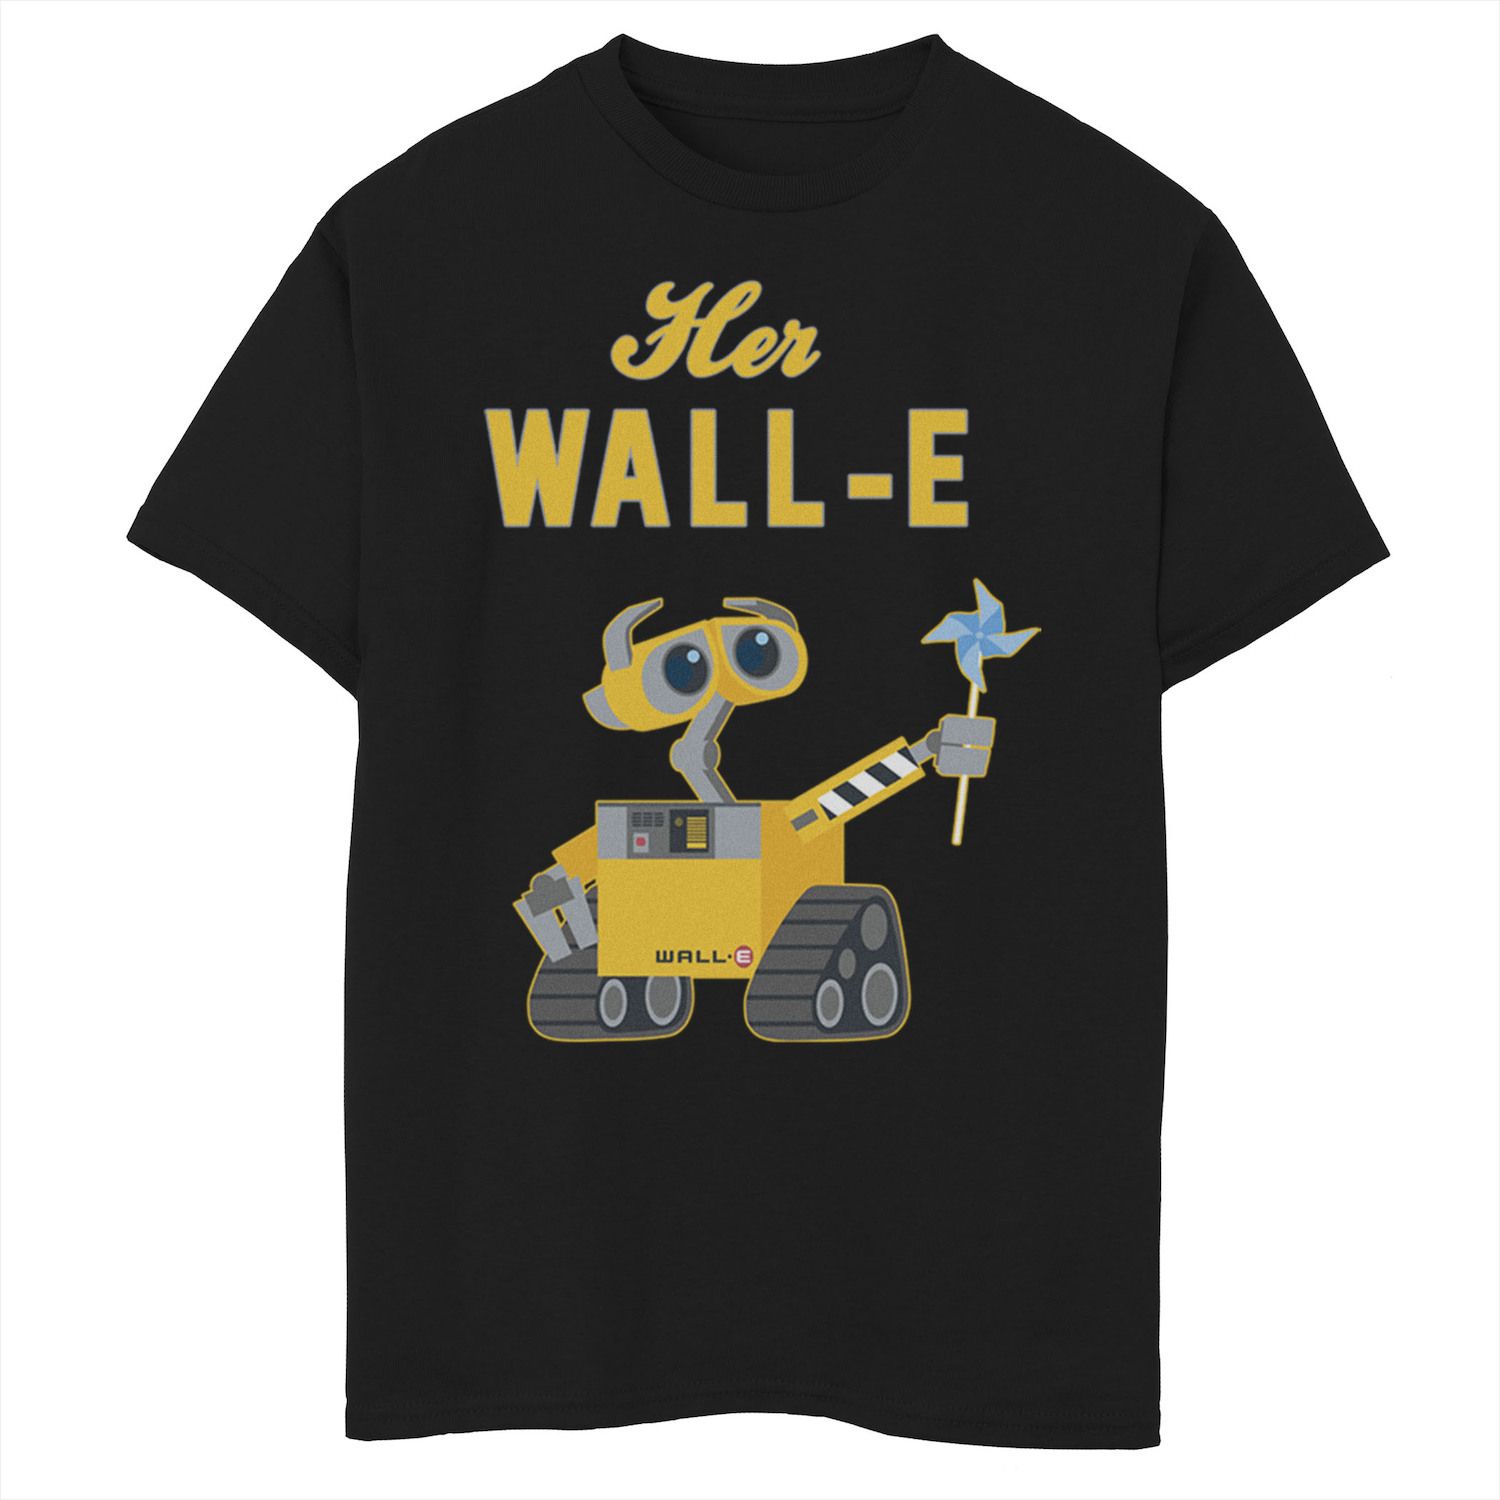 disney wall e level 5 Футболка Wall-E Her Wall-E для мальчиков 8–20 лет Disney/Pixar Disney / Pixar